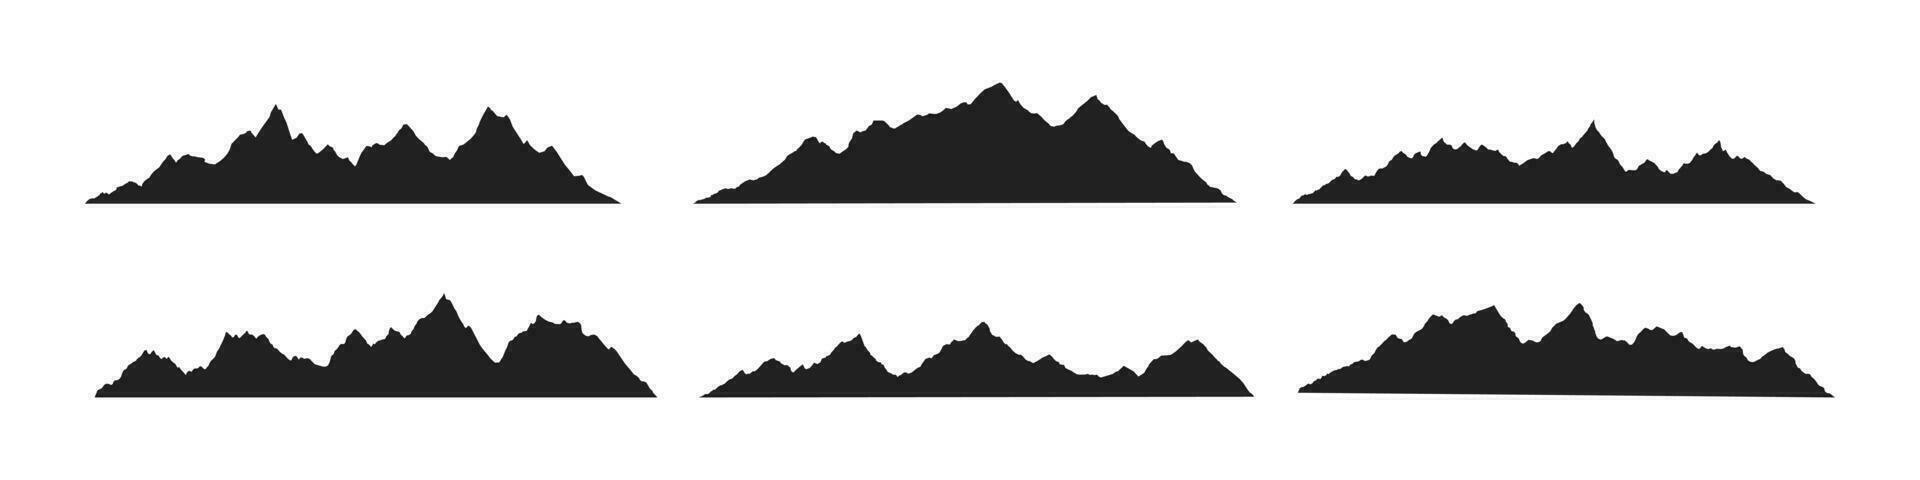 montaña crestas pico siluetas plano estilo diseño vector ilustración conjunto aislado en blanco antecedentes. rocoso montañas picos con varios rangos al aire libre naturaleza paisaje antecedentes diseño elementos.